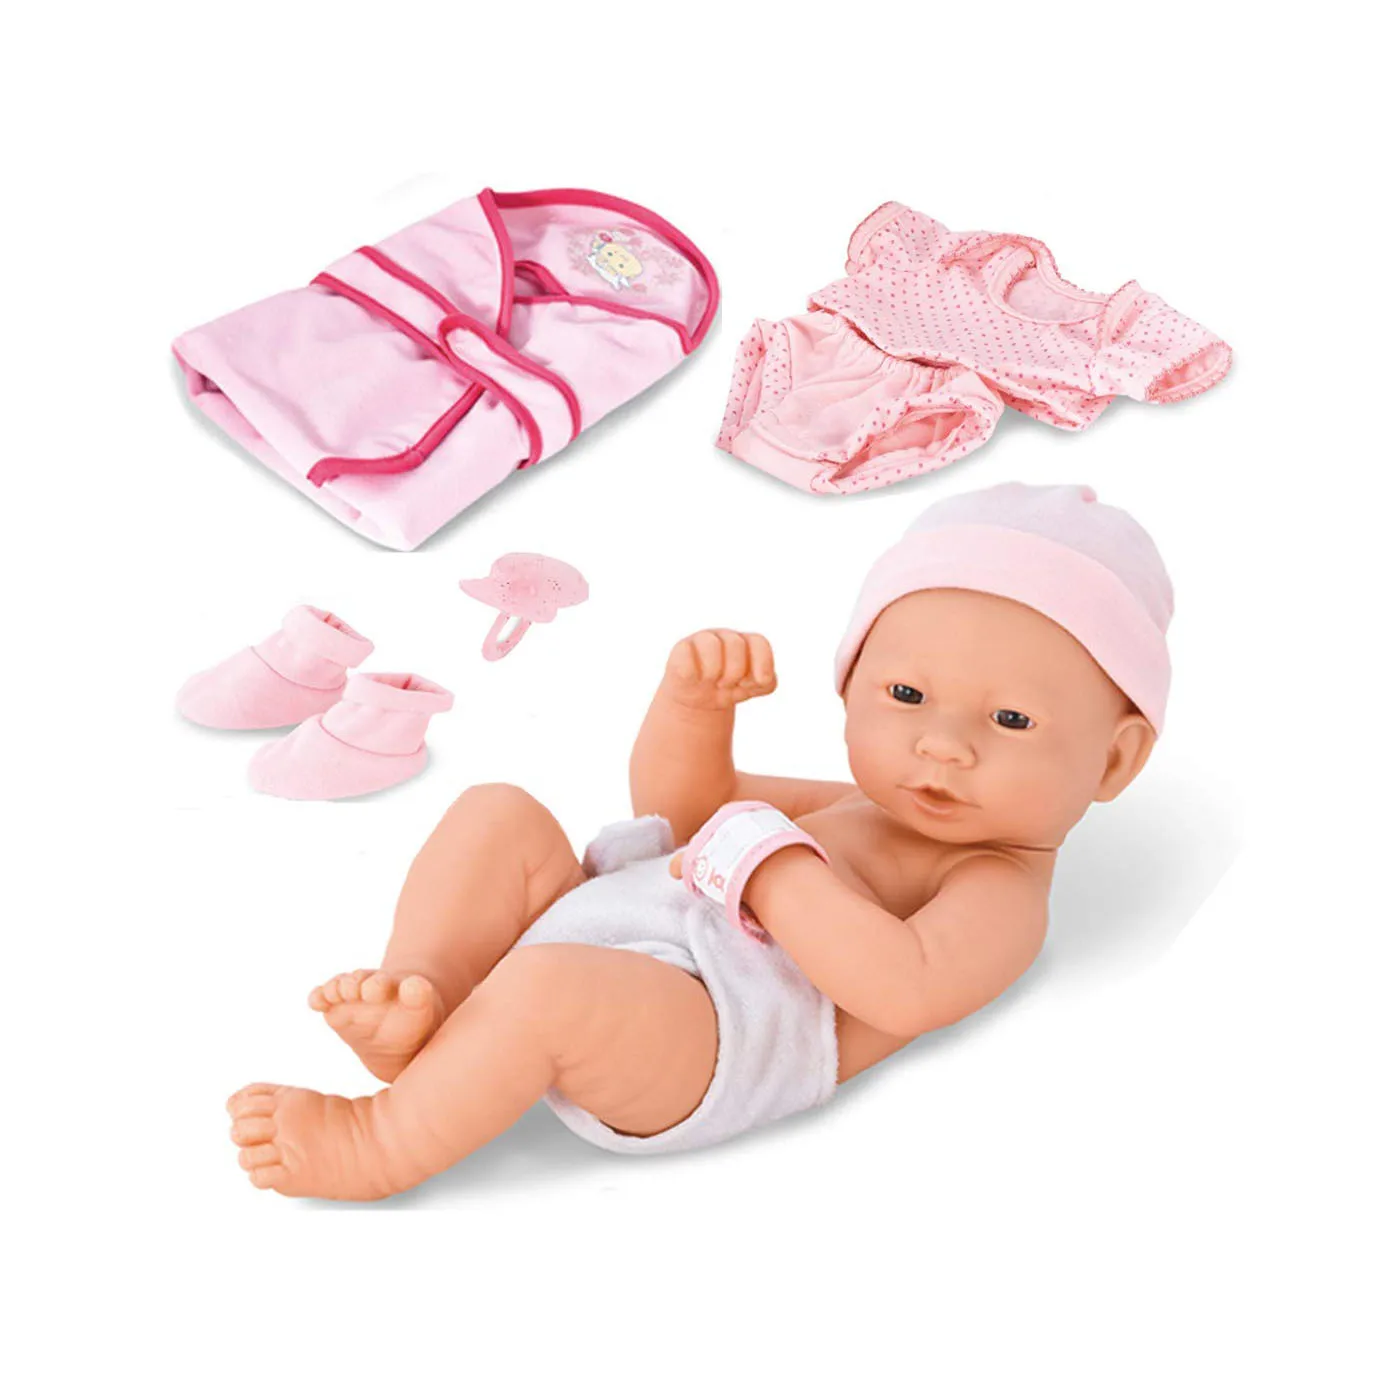 newborn baby girl toy